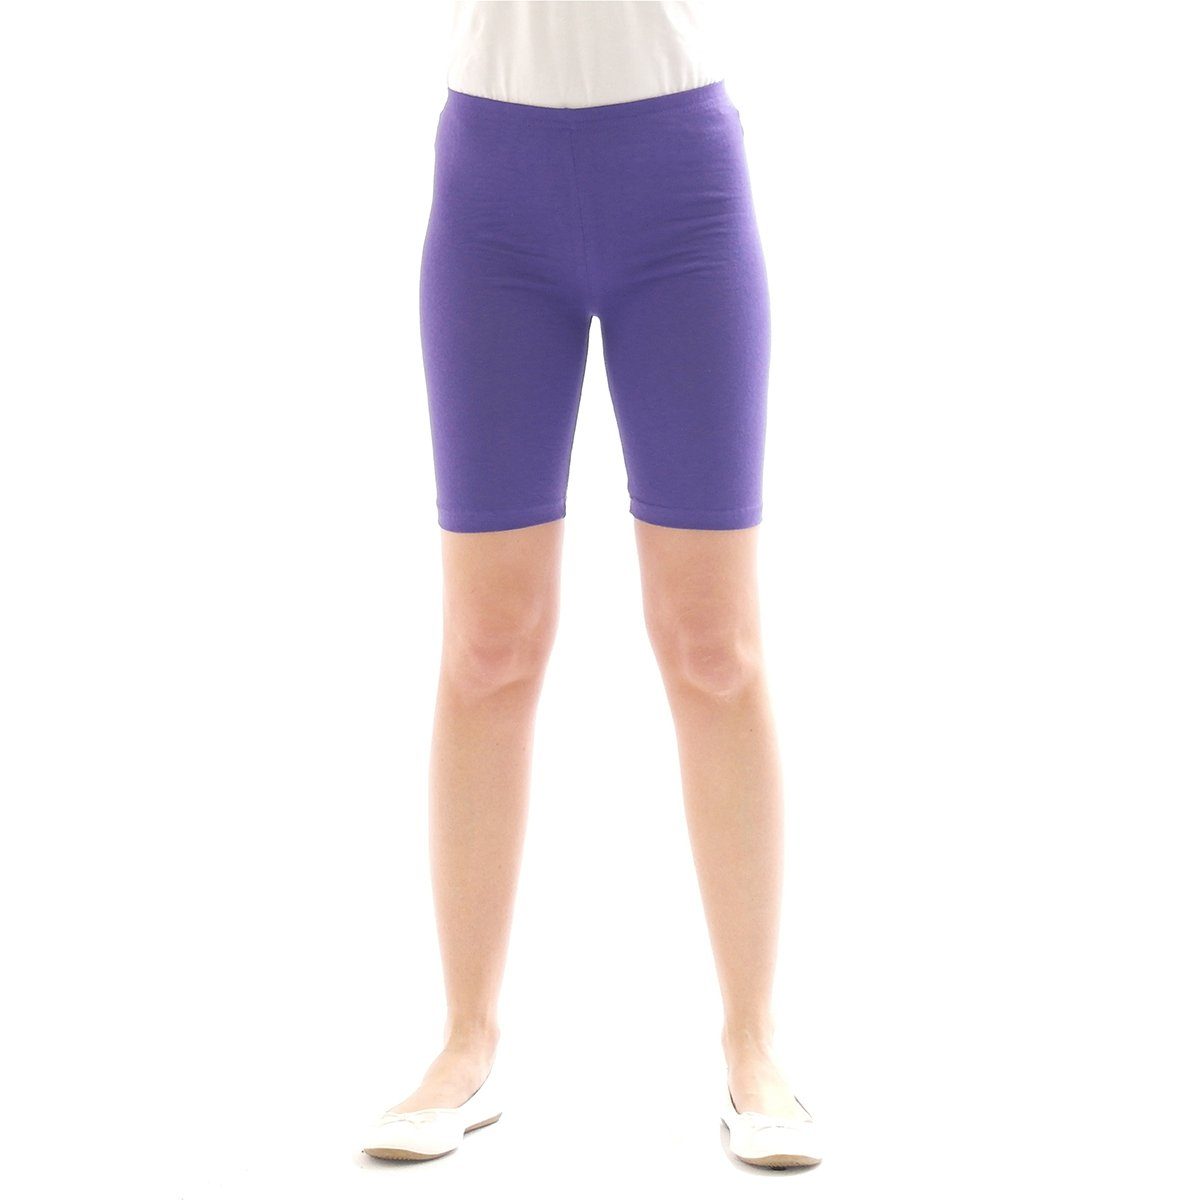 SYS Shorts Kinder Shorts Sport Pants 1/2 Baumwolle Jungen Mädchen violett